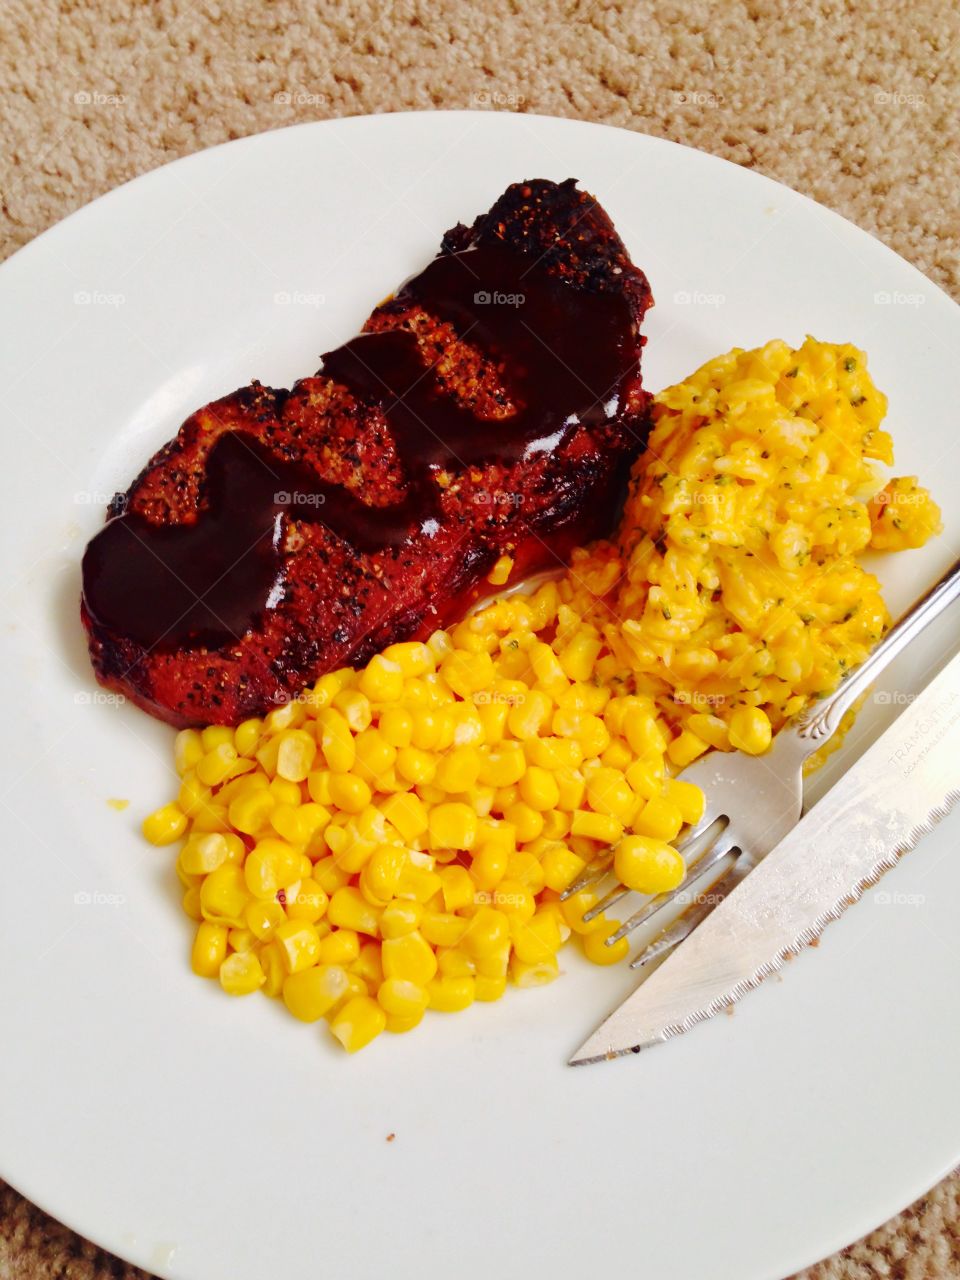 Steak, corn & rice